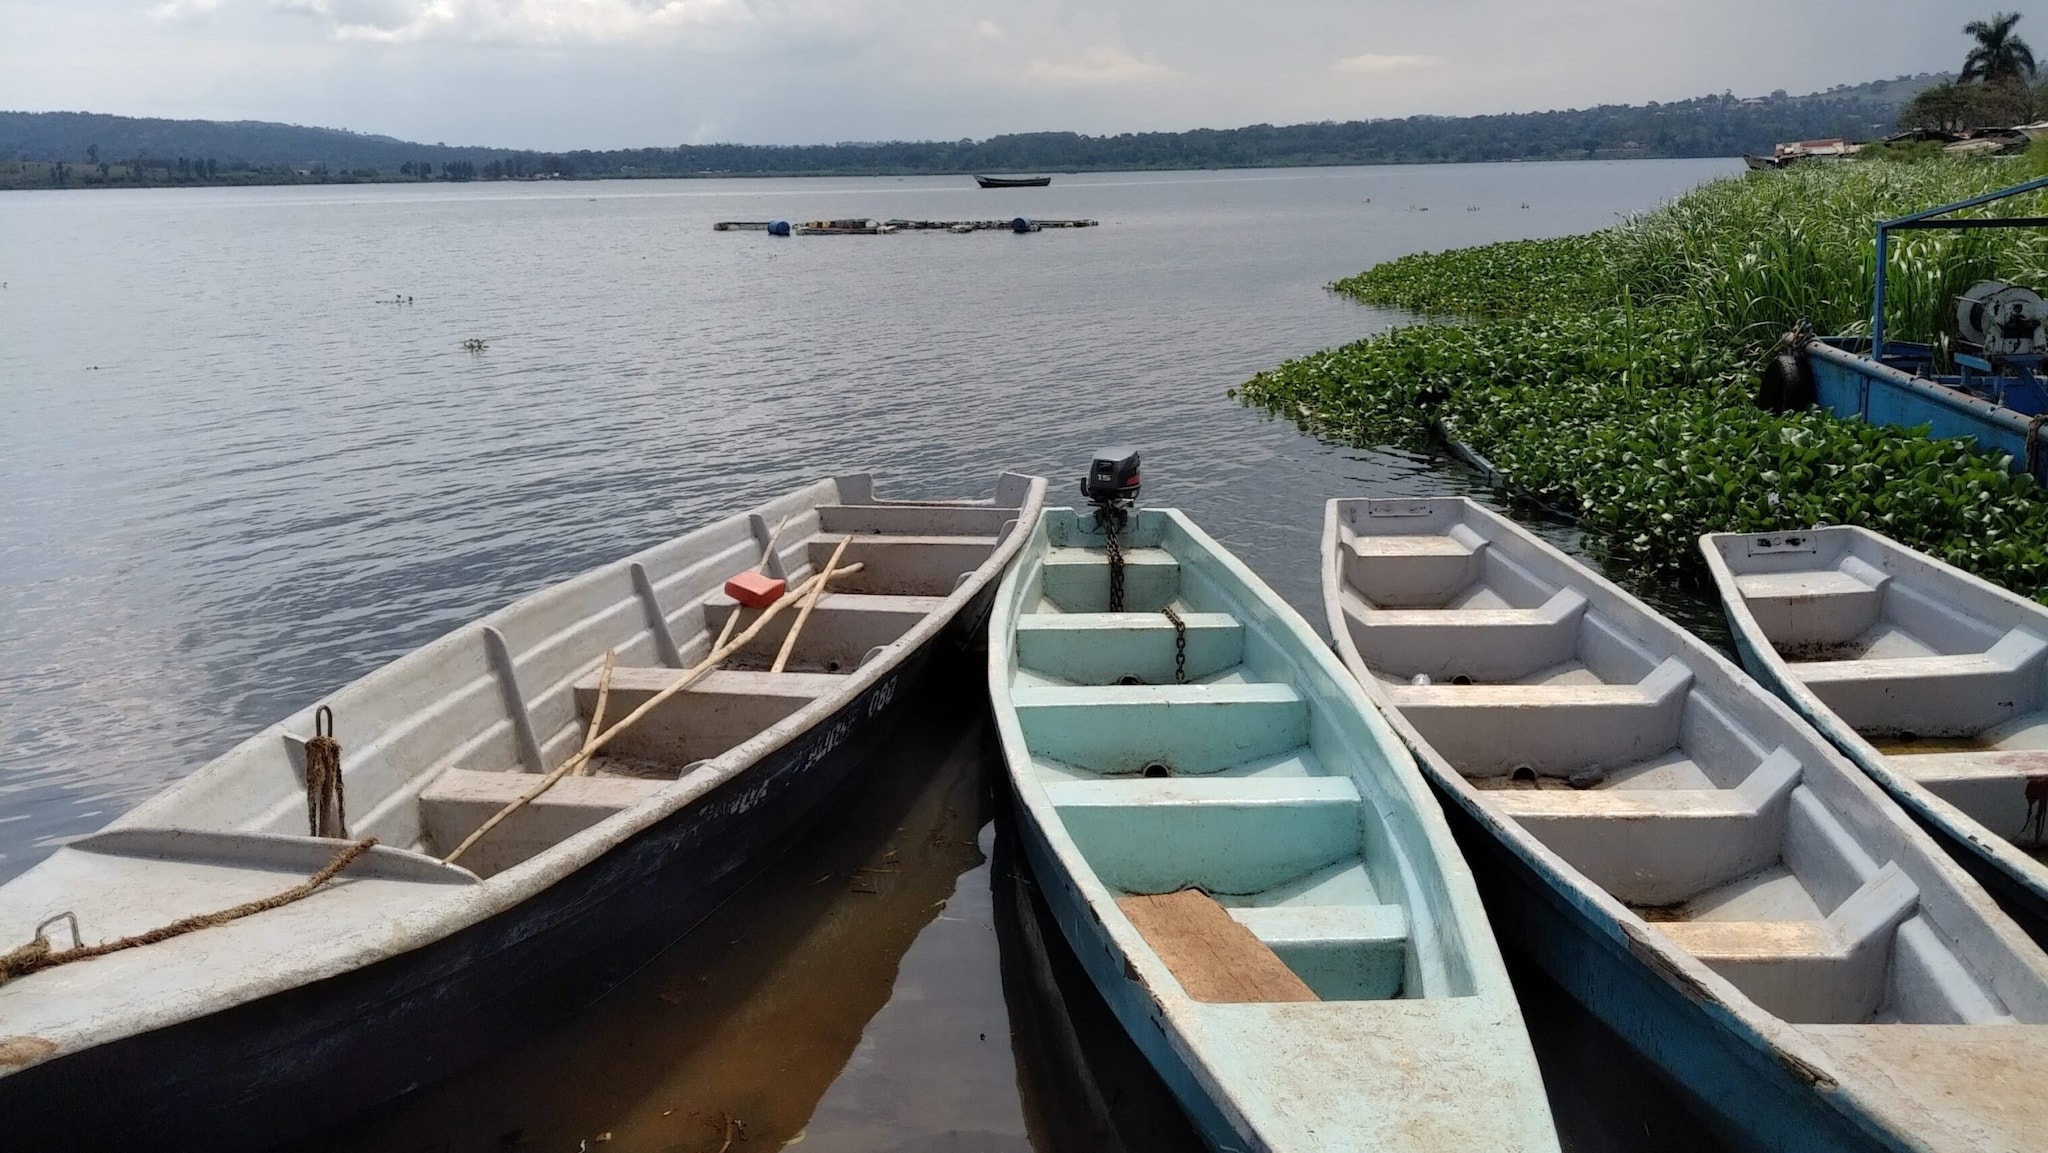 Boats on Lake Victoria